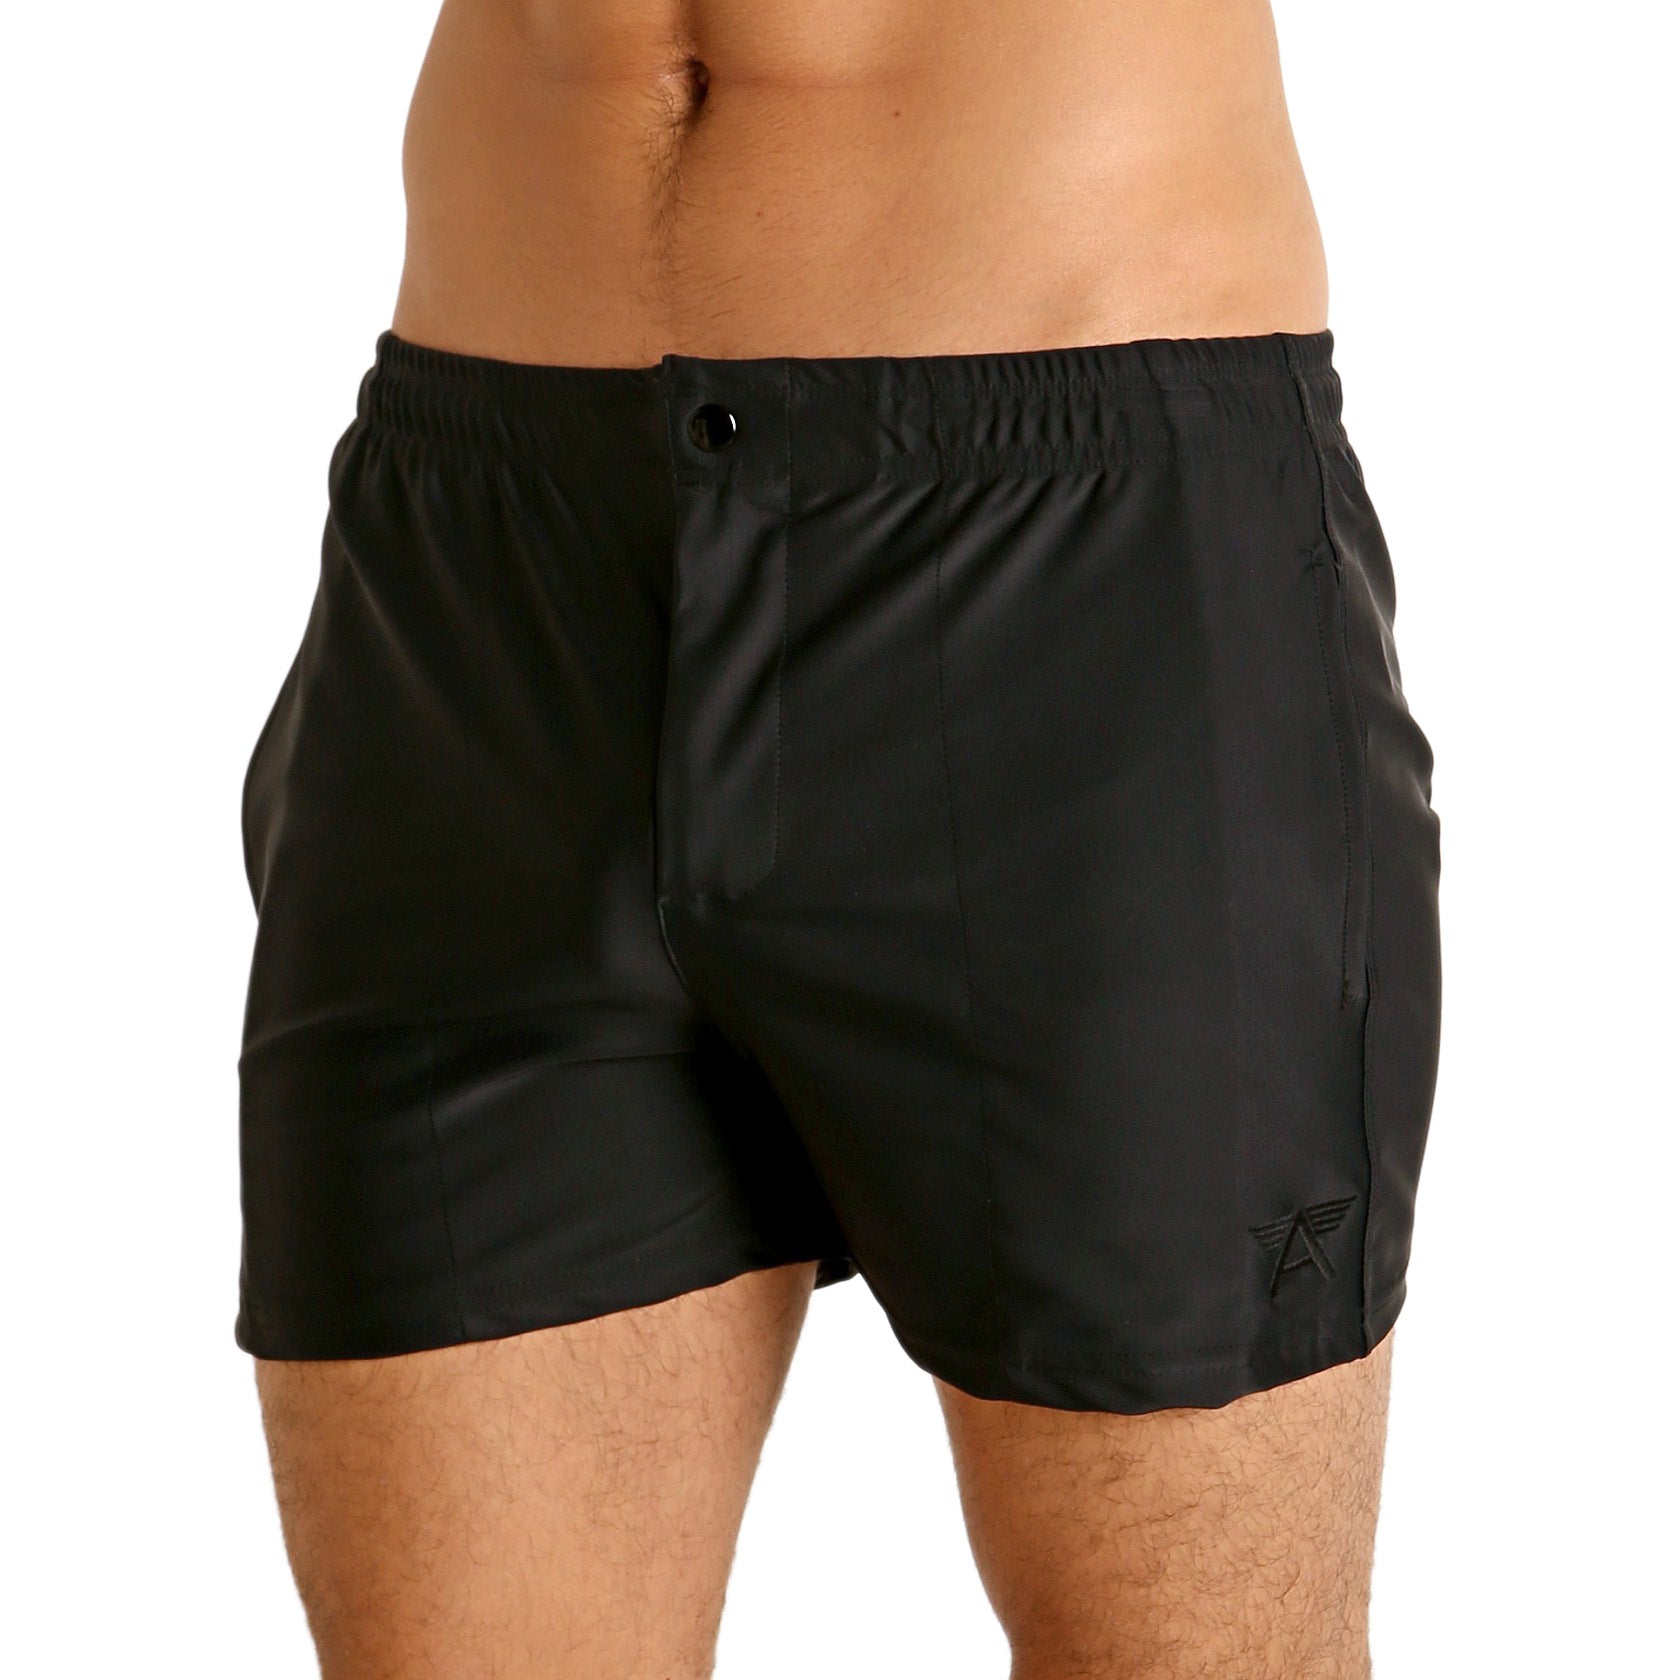 Mod Swim Shorts - Solid Black - Shorter Length - Destination PSP